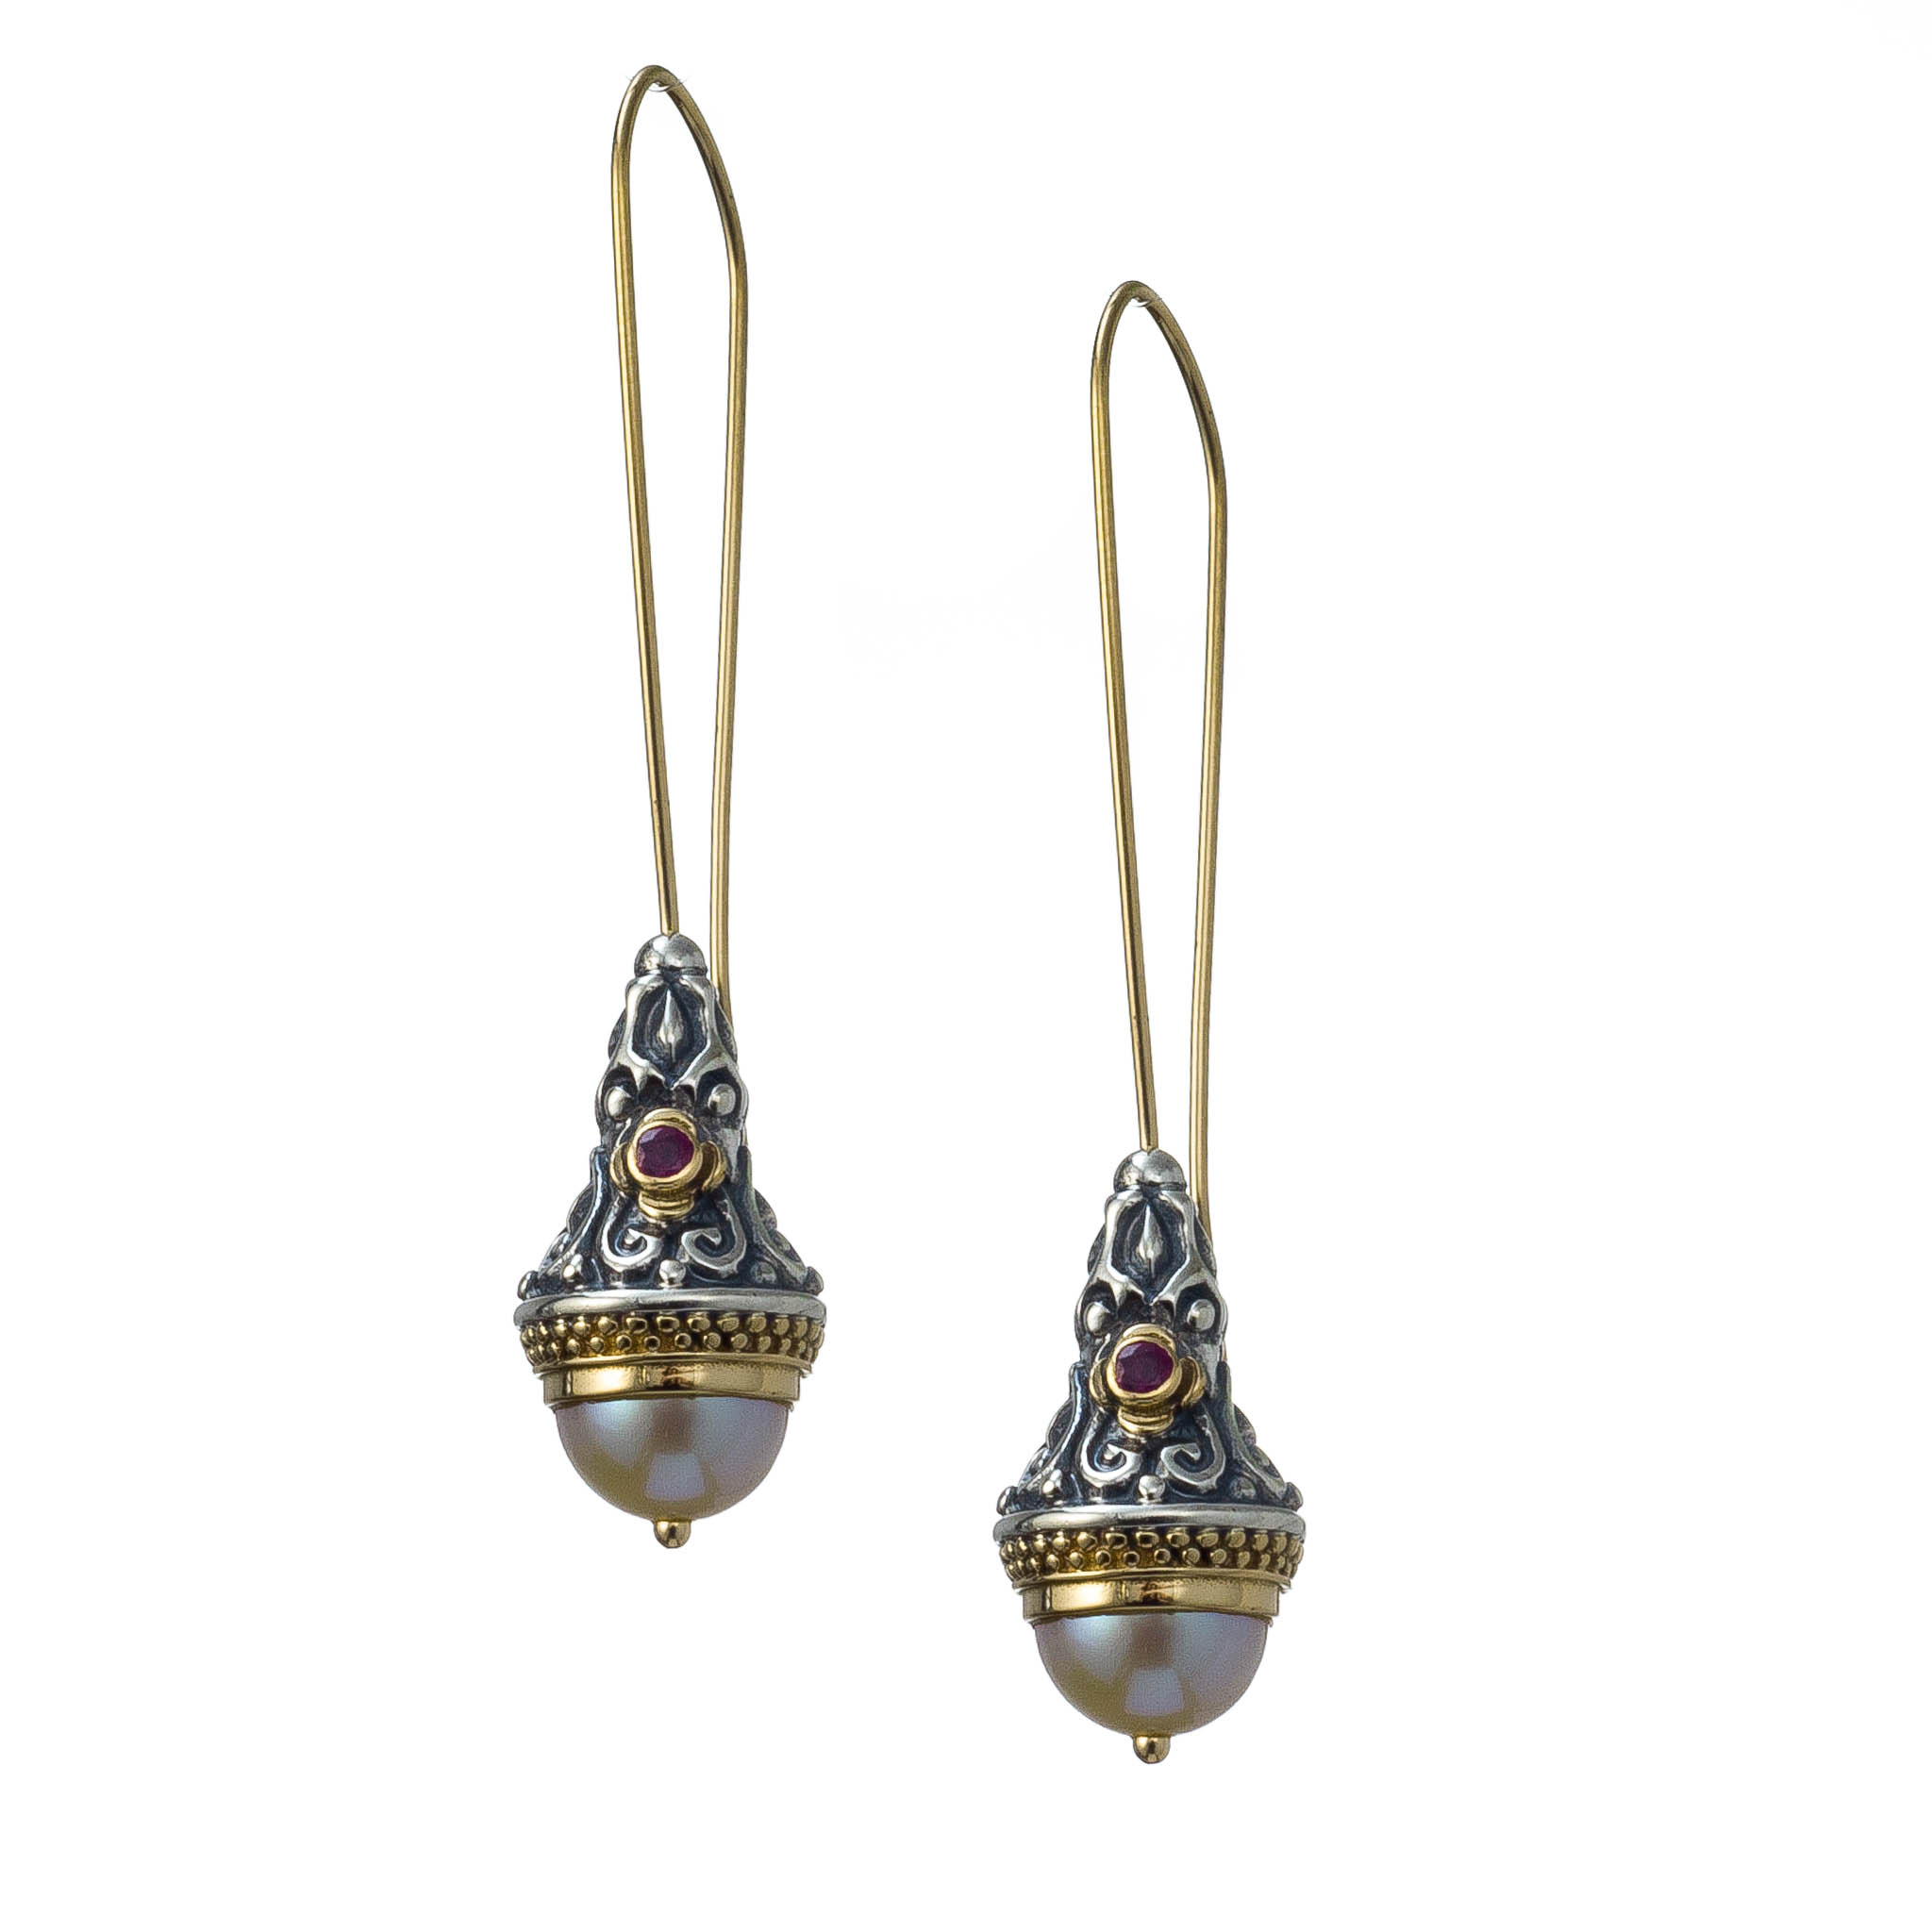 Santorini earrings in 18K Gold & Sterling Silver